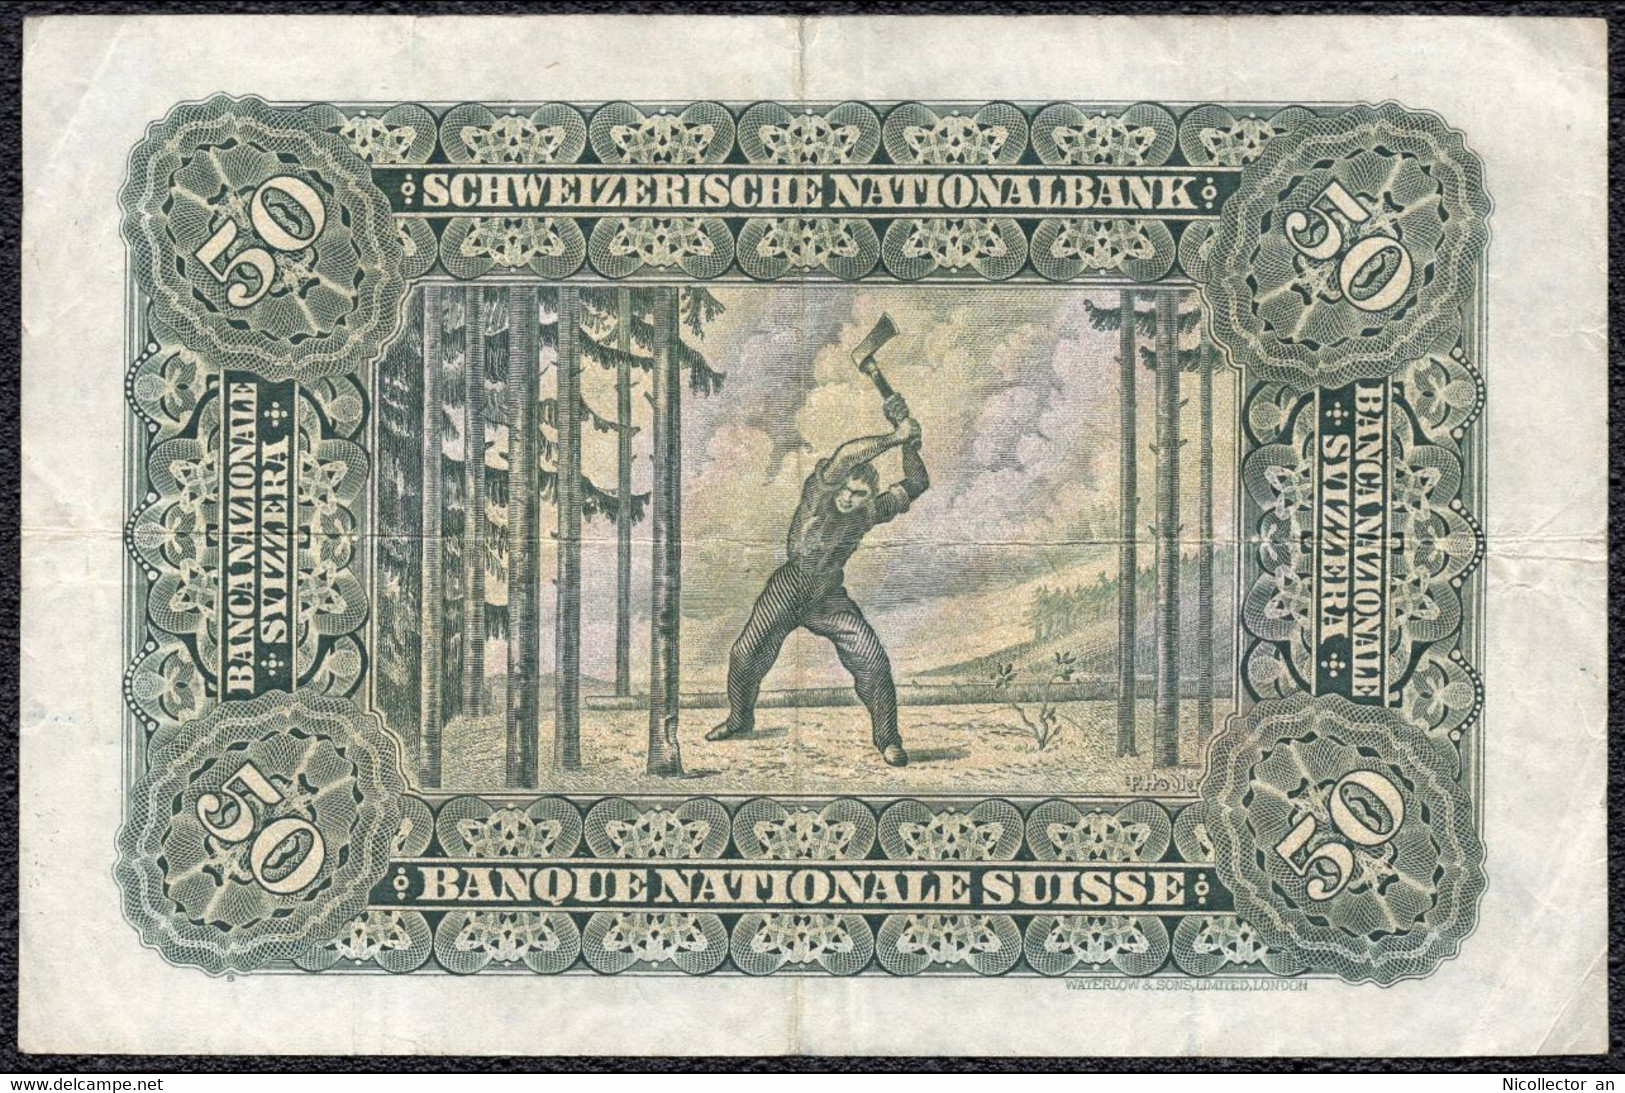 Switzerland 50 Francs 1947 VF Banknote - Switzerland